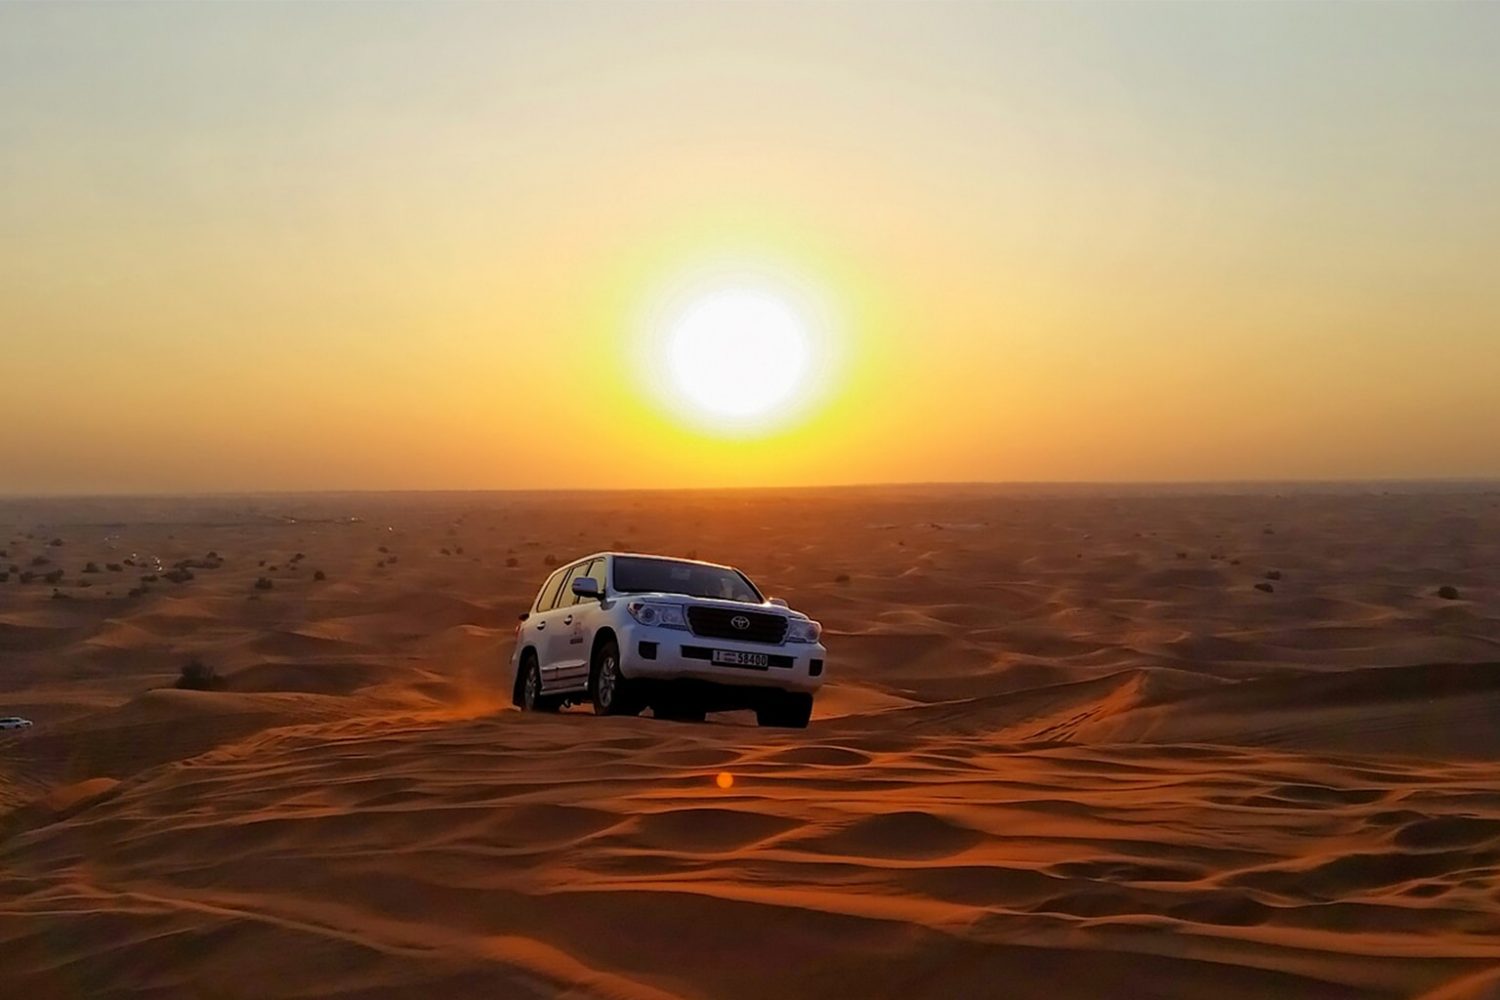 Morning desert safari exclusive car